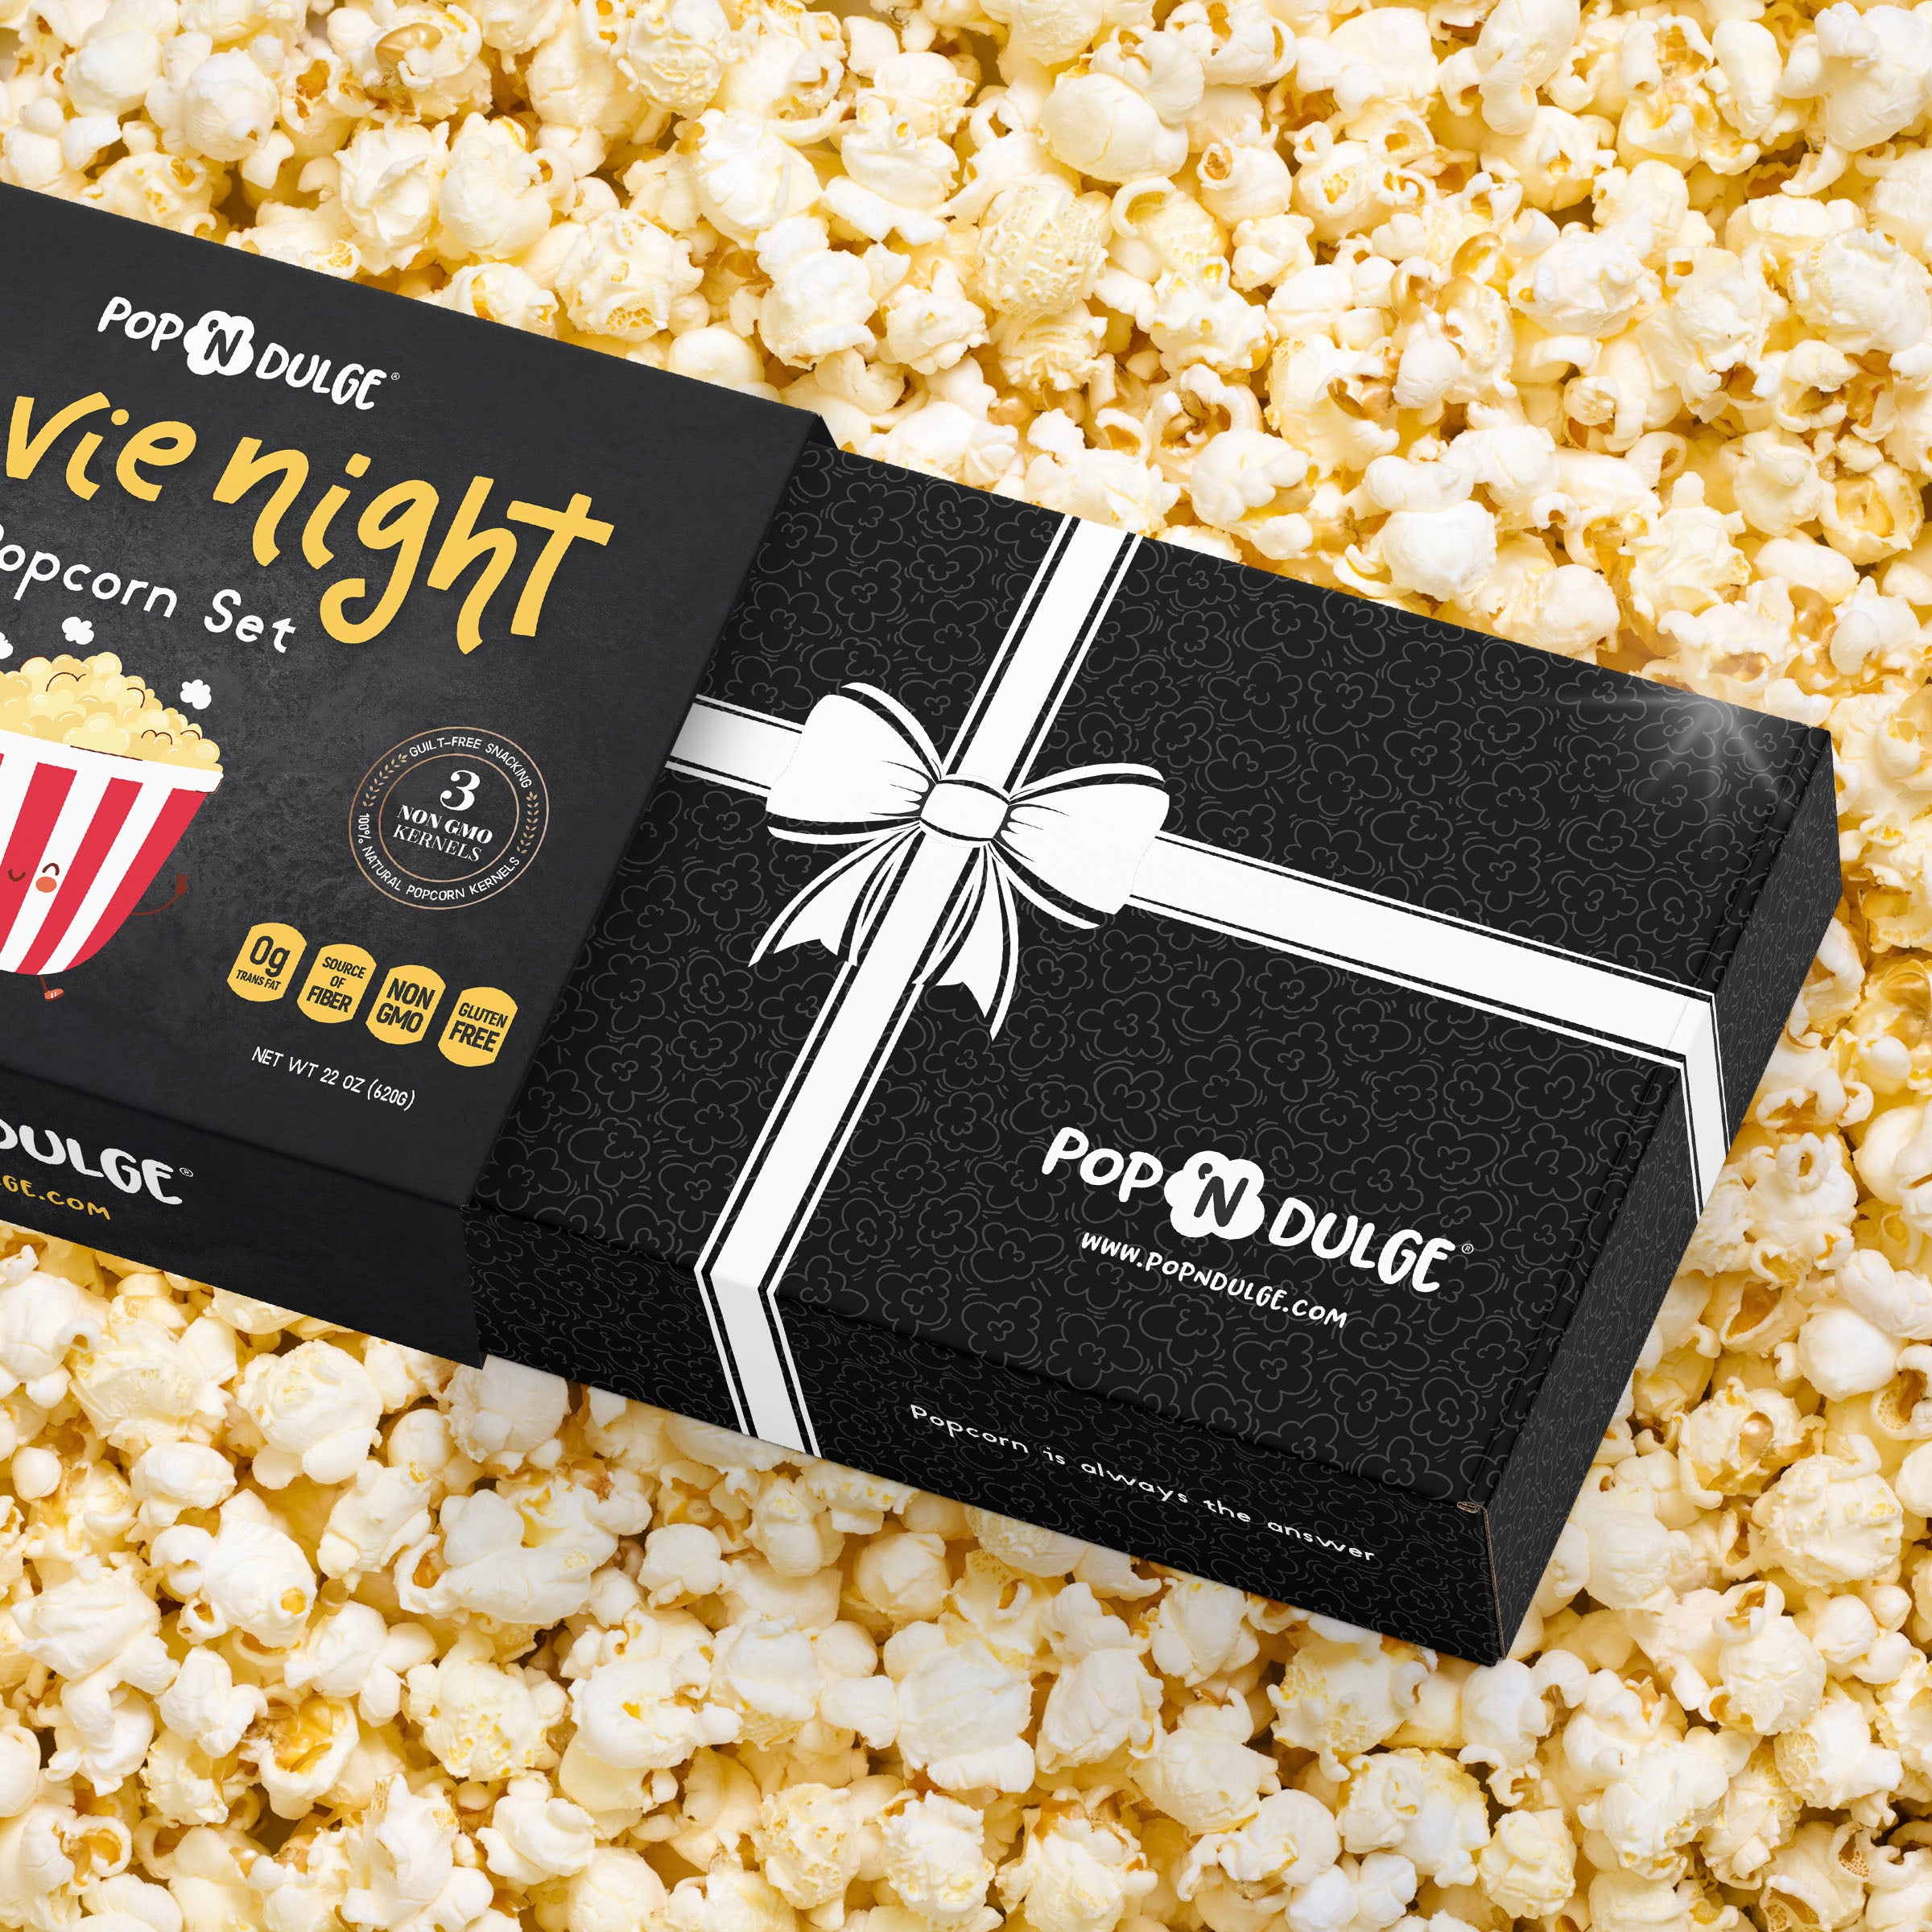 Prepara Popcorn Popper Gift Set